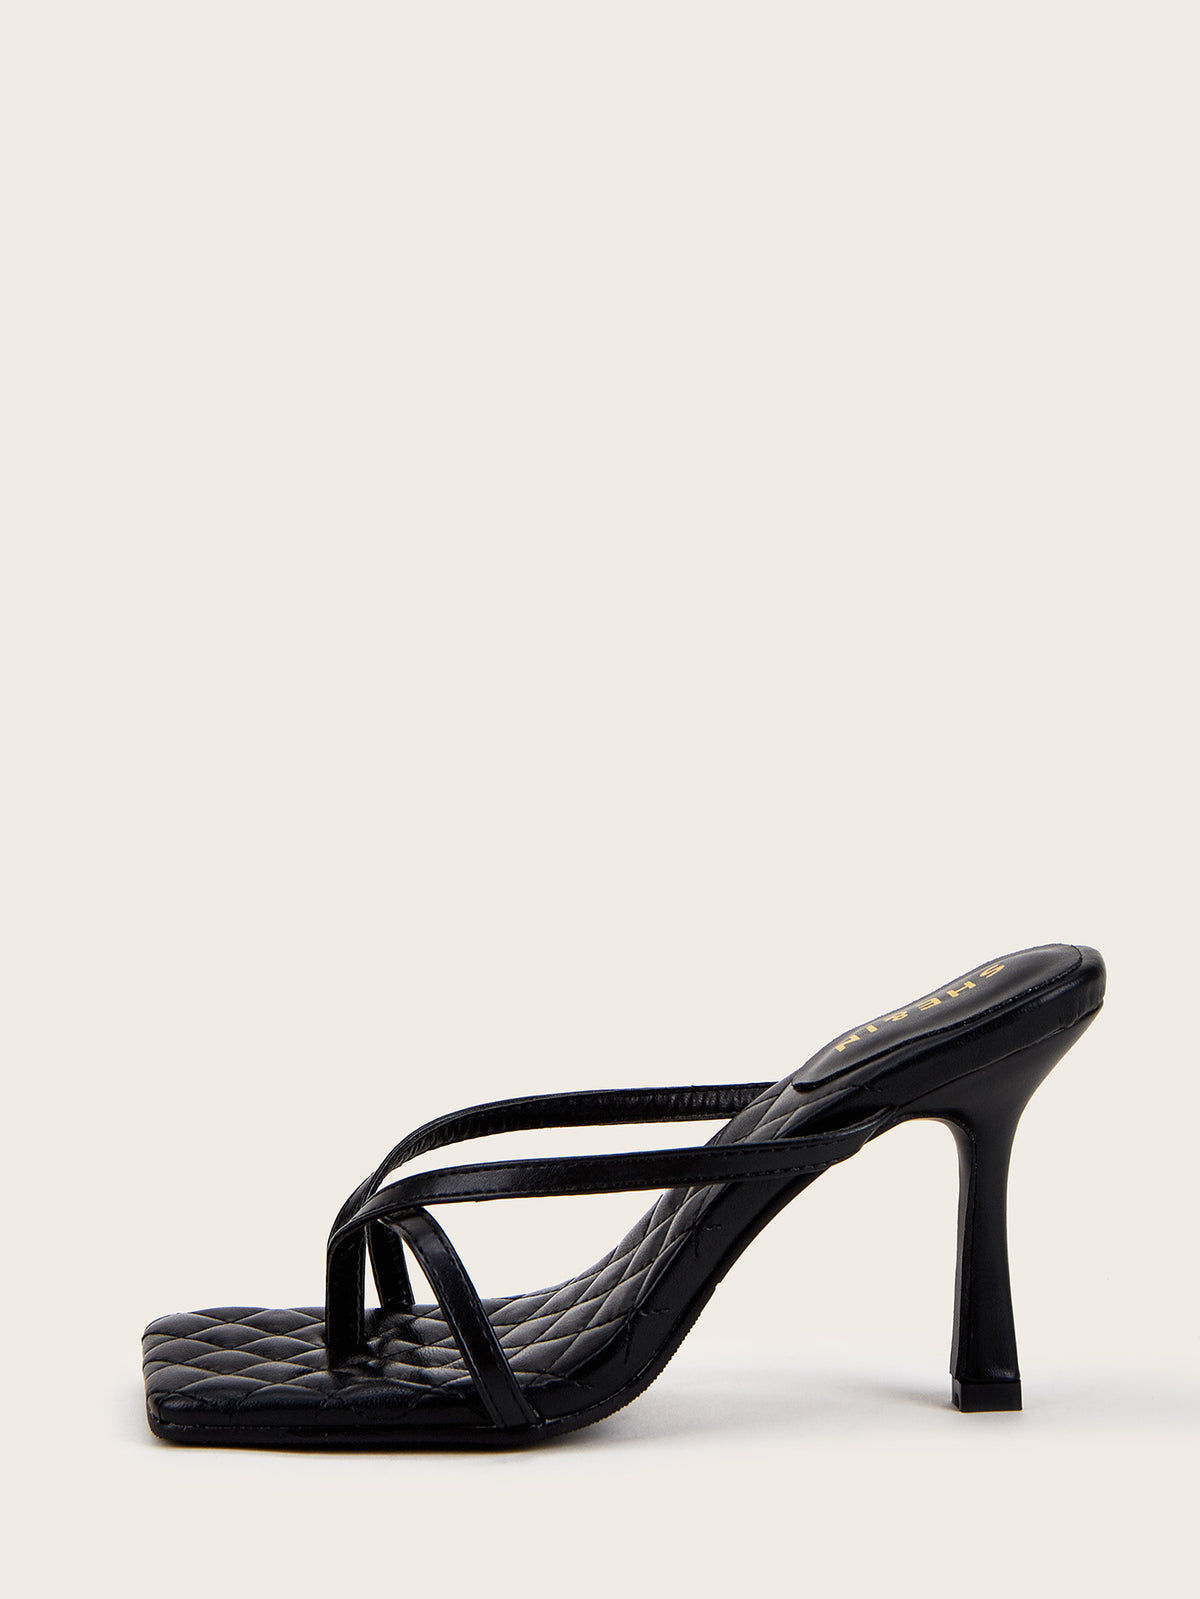 Plus Size Stiletto Heels - runwayfashionista.com